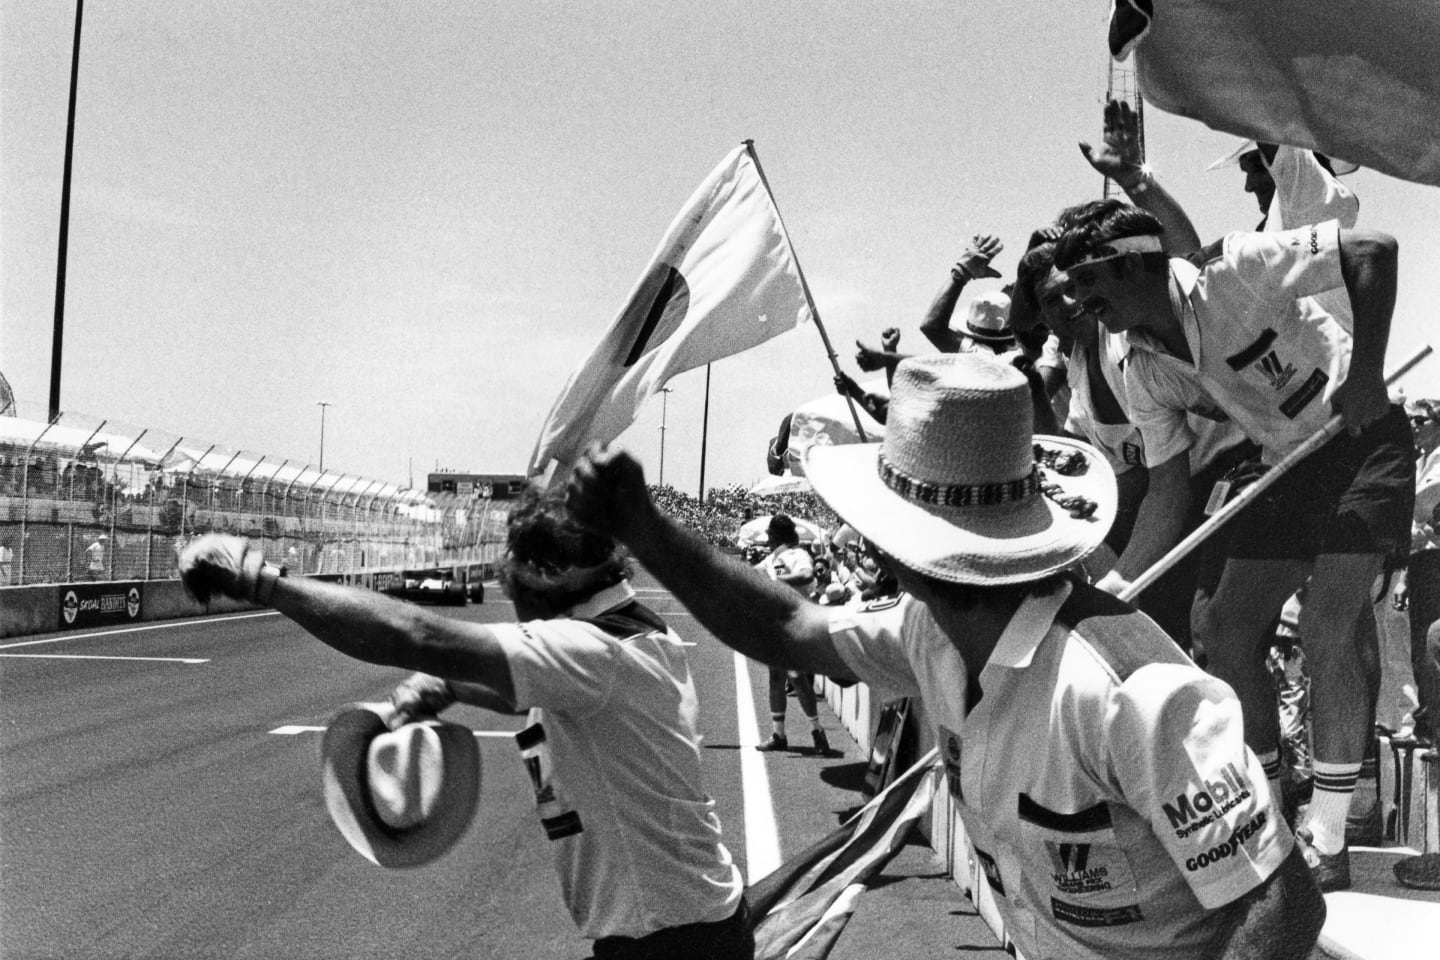 A Japanese flag was waved when Keke Rosberg won at Dallas in 1984 aboard his Honda-powered Williams